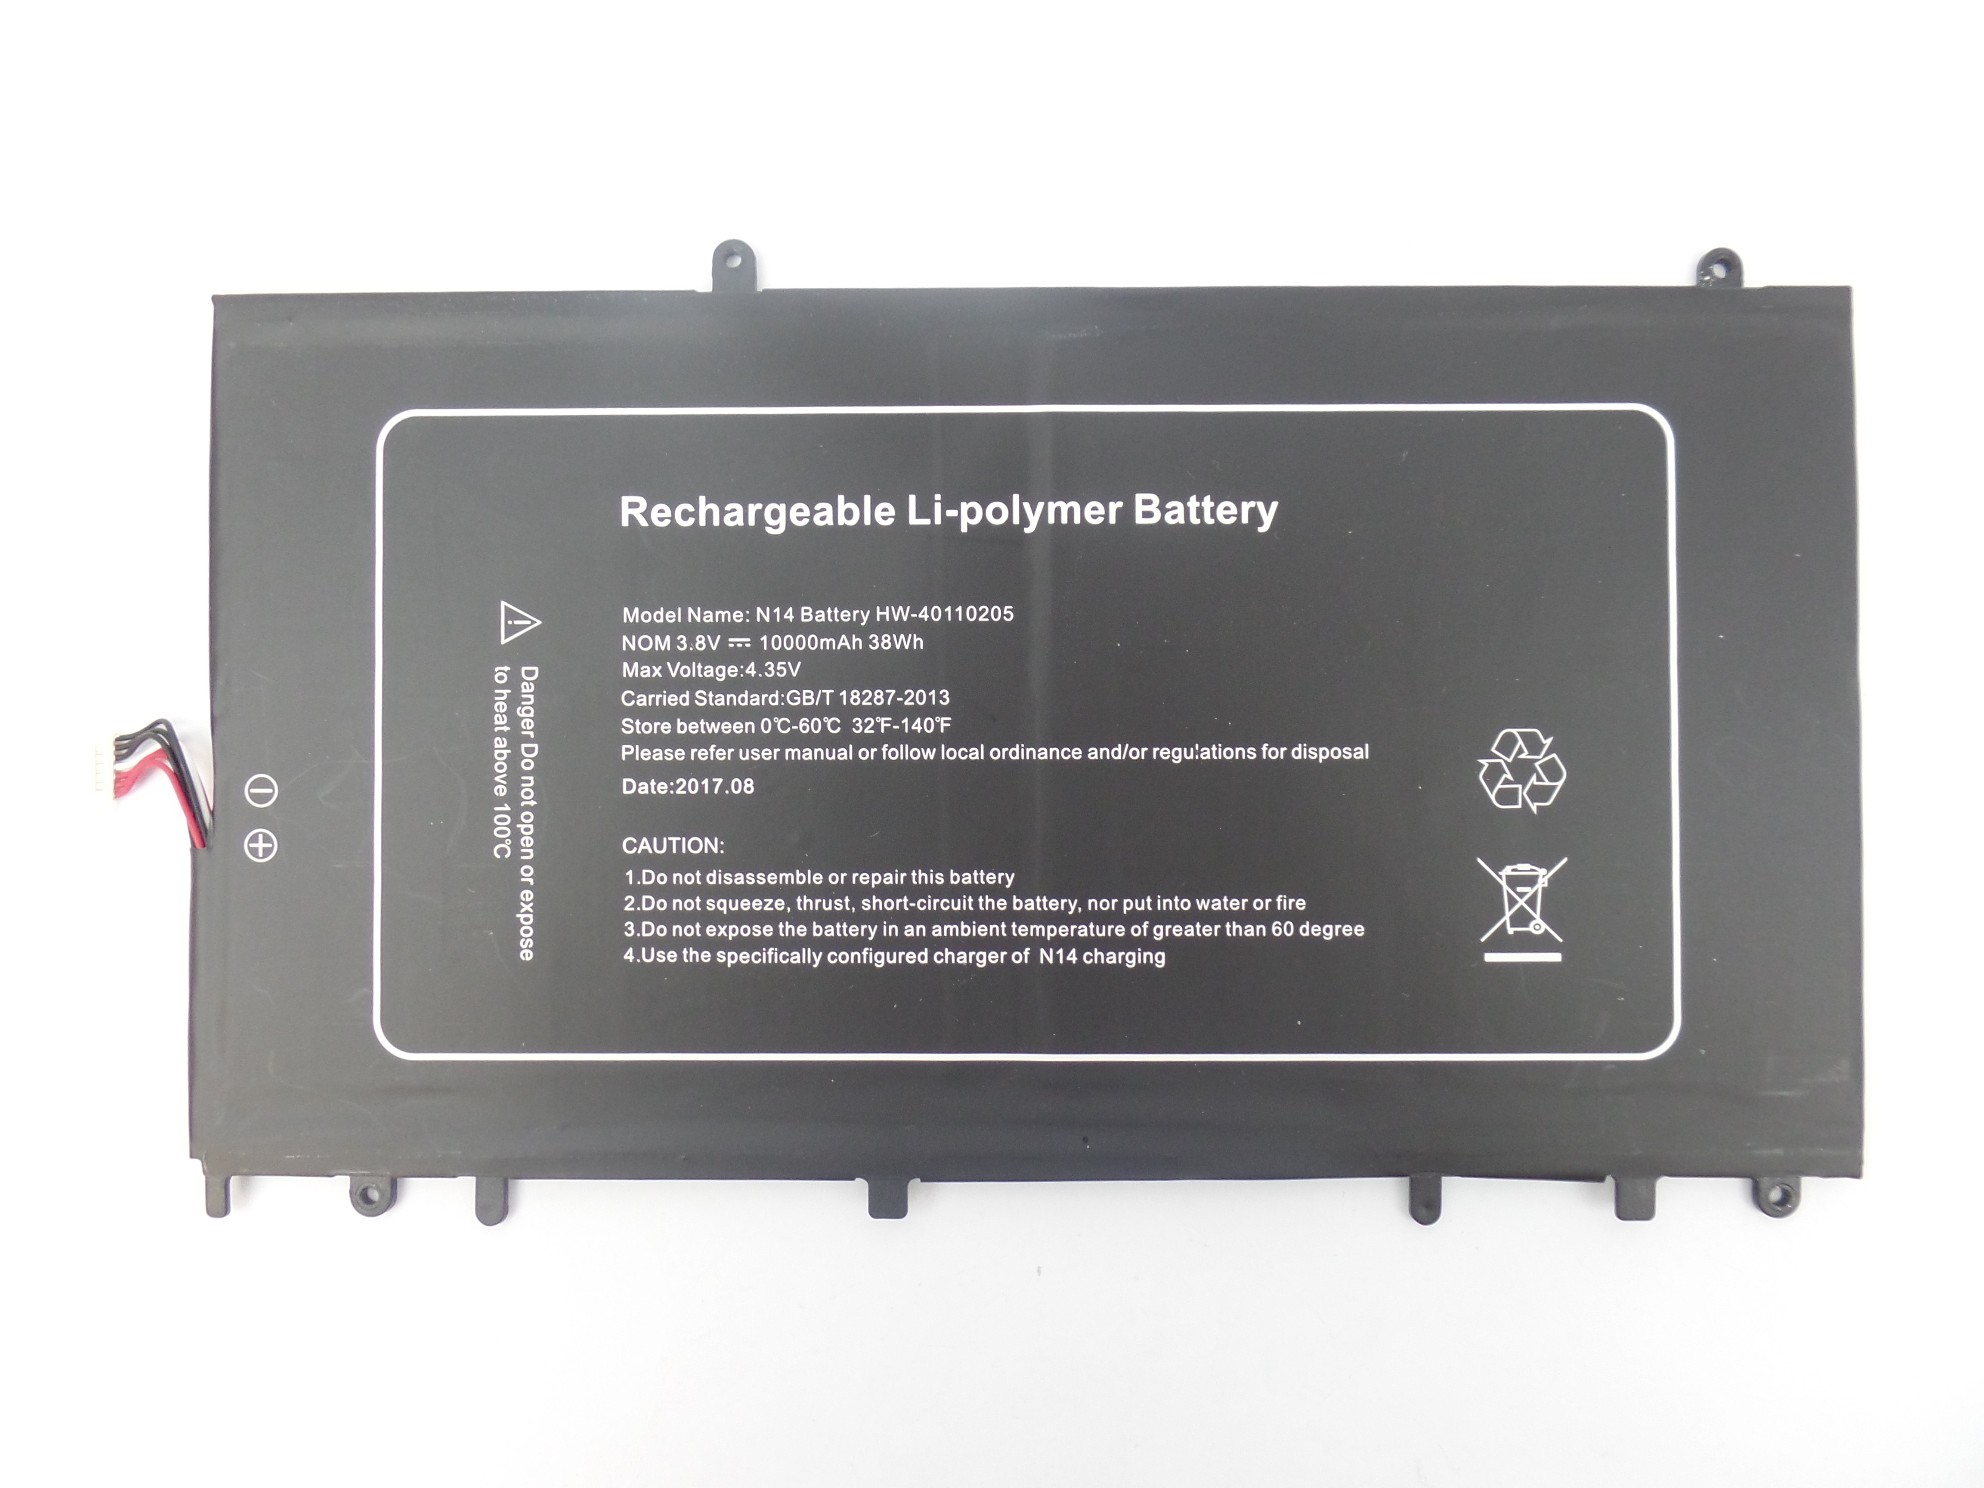 OEM Rechargeable Li-polymer Battery N14 HW-40110205 for EZbook 2 Jumper